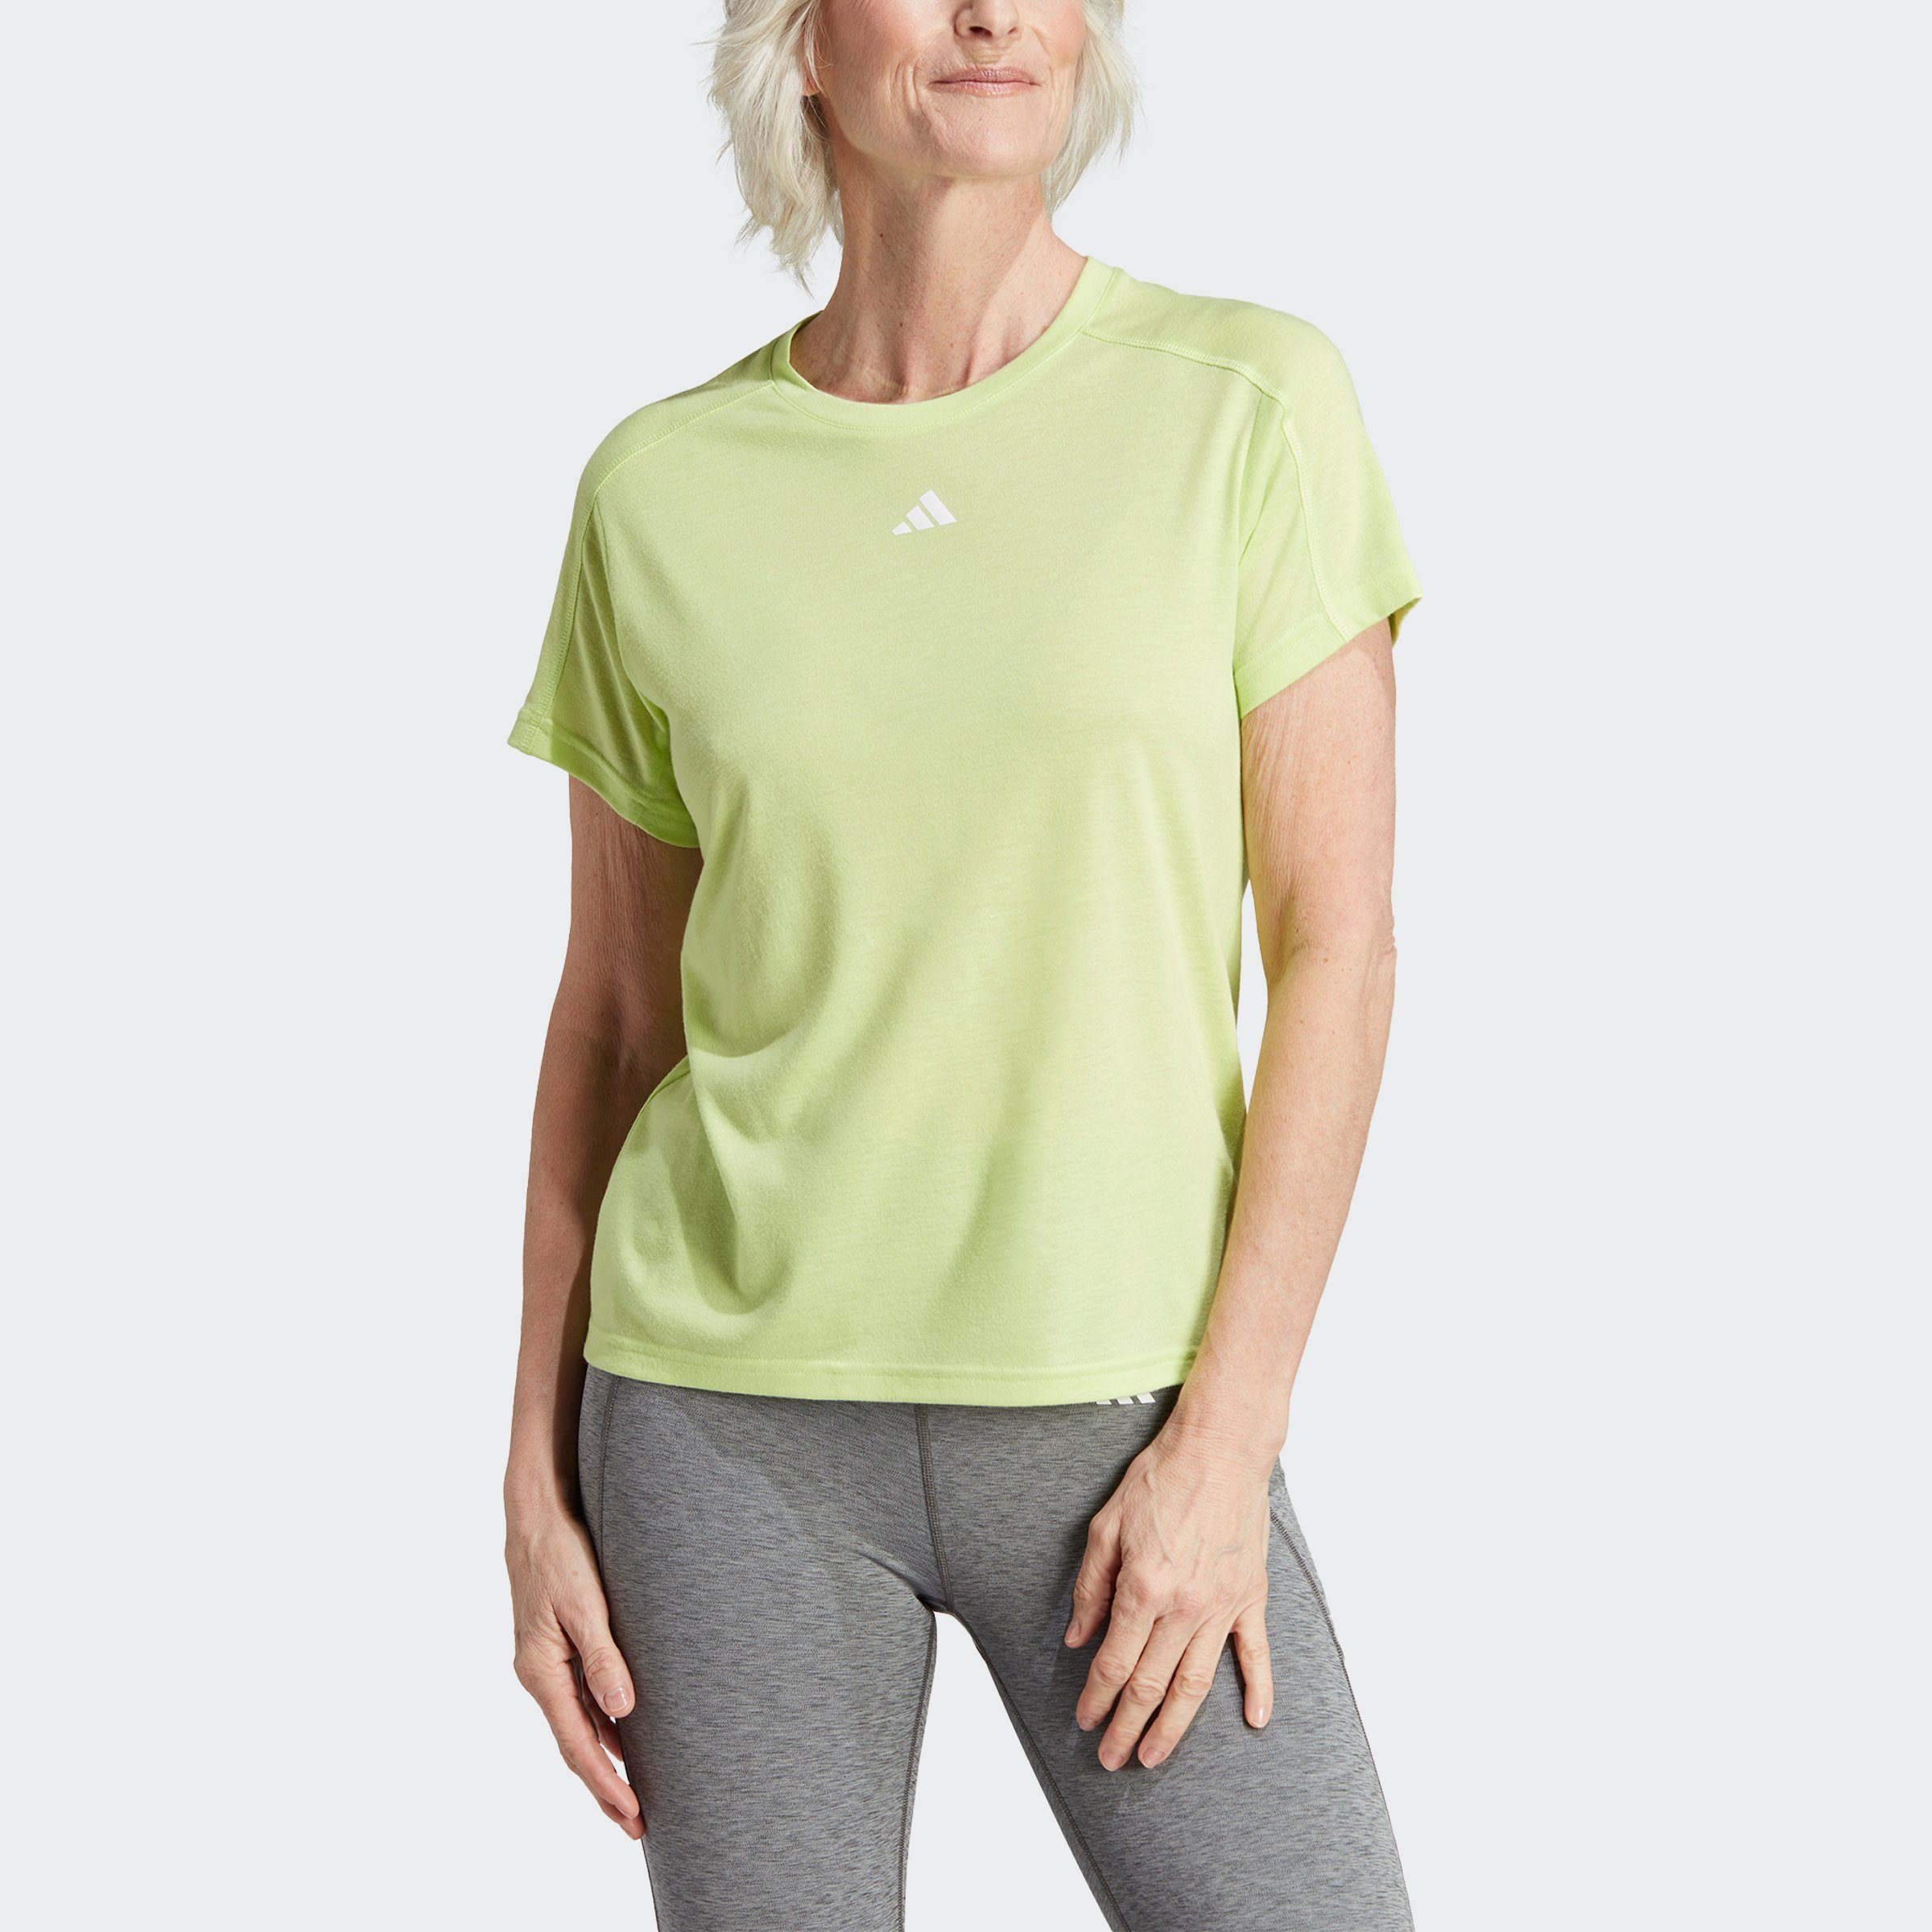 BRANDING Pulse ESSENTIALS TRAIN AEROREADY adidas MINIMAL T-Shirt Performance Lime